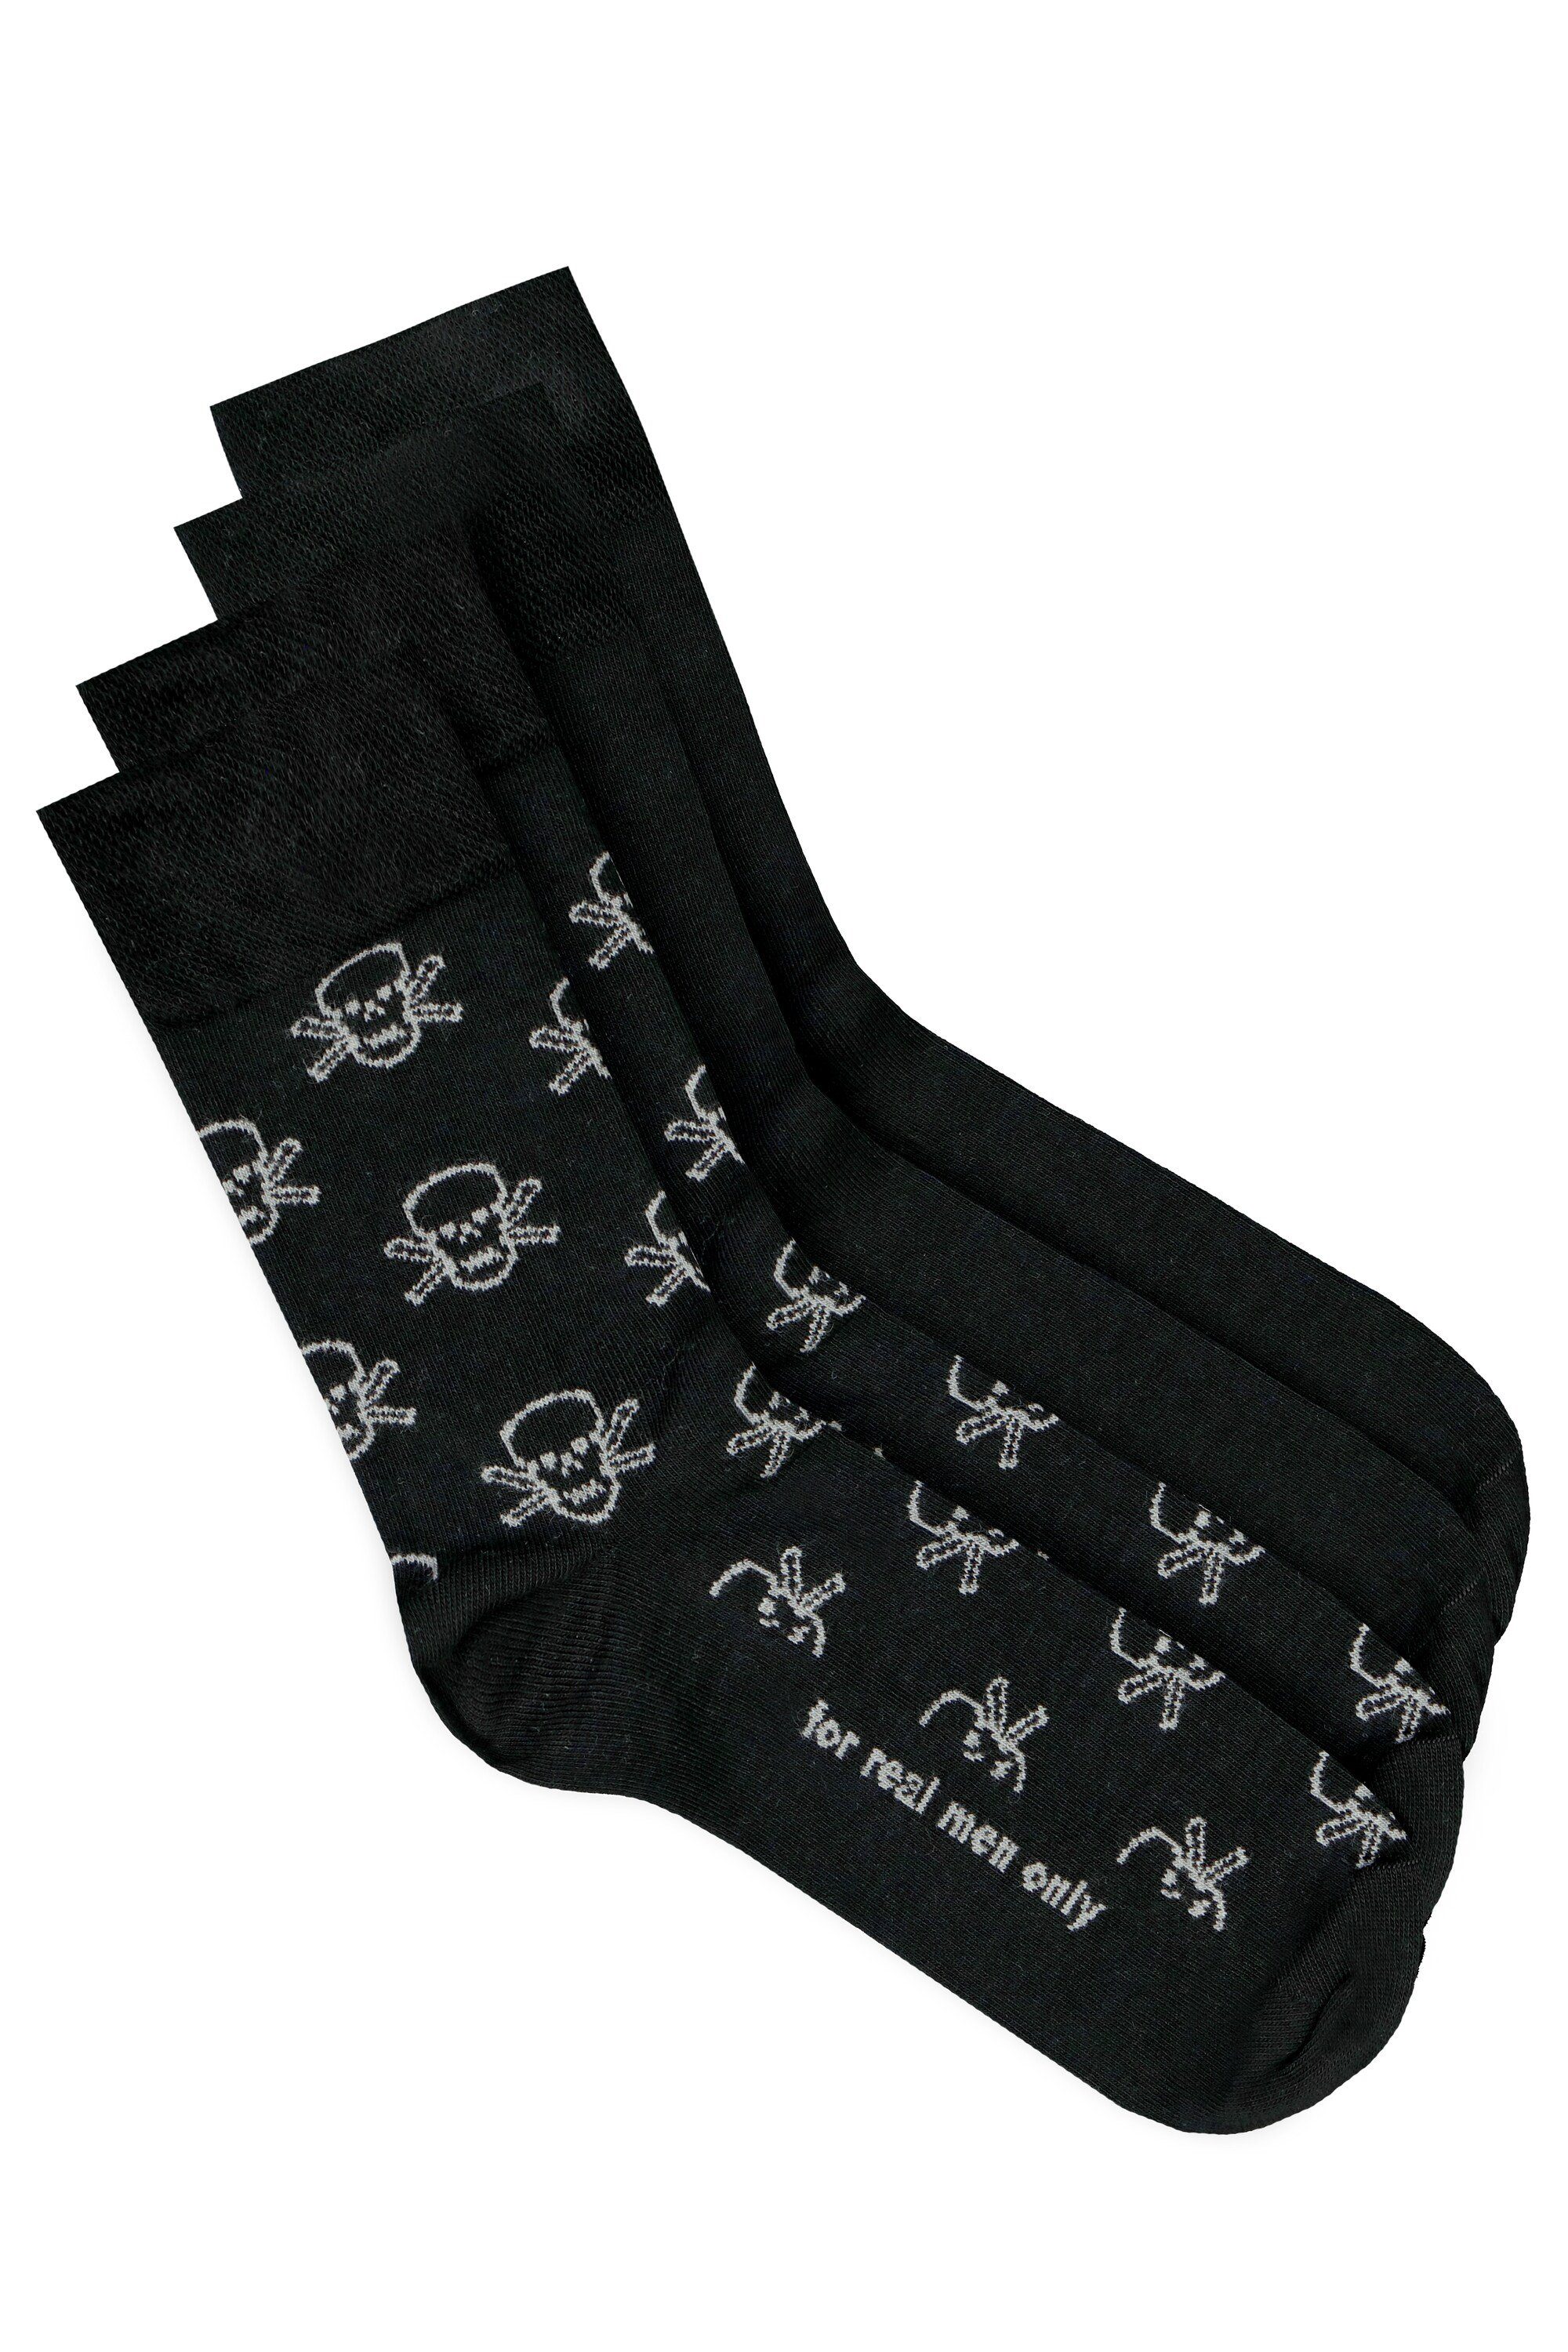 Totenkopf Pack schwarz Basicsocken Komfortbündchen JP1880 JP1880 2er Socken